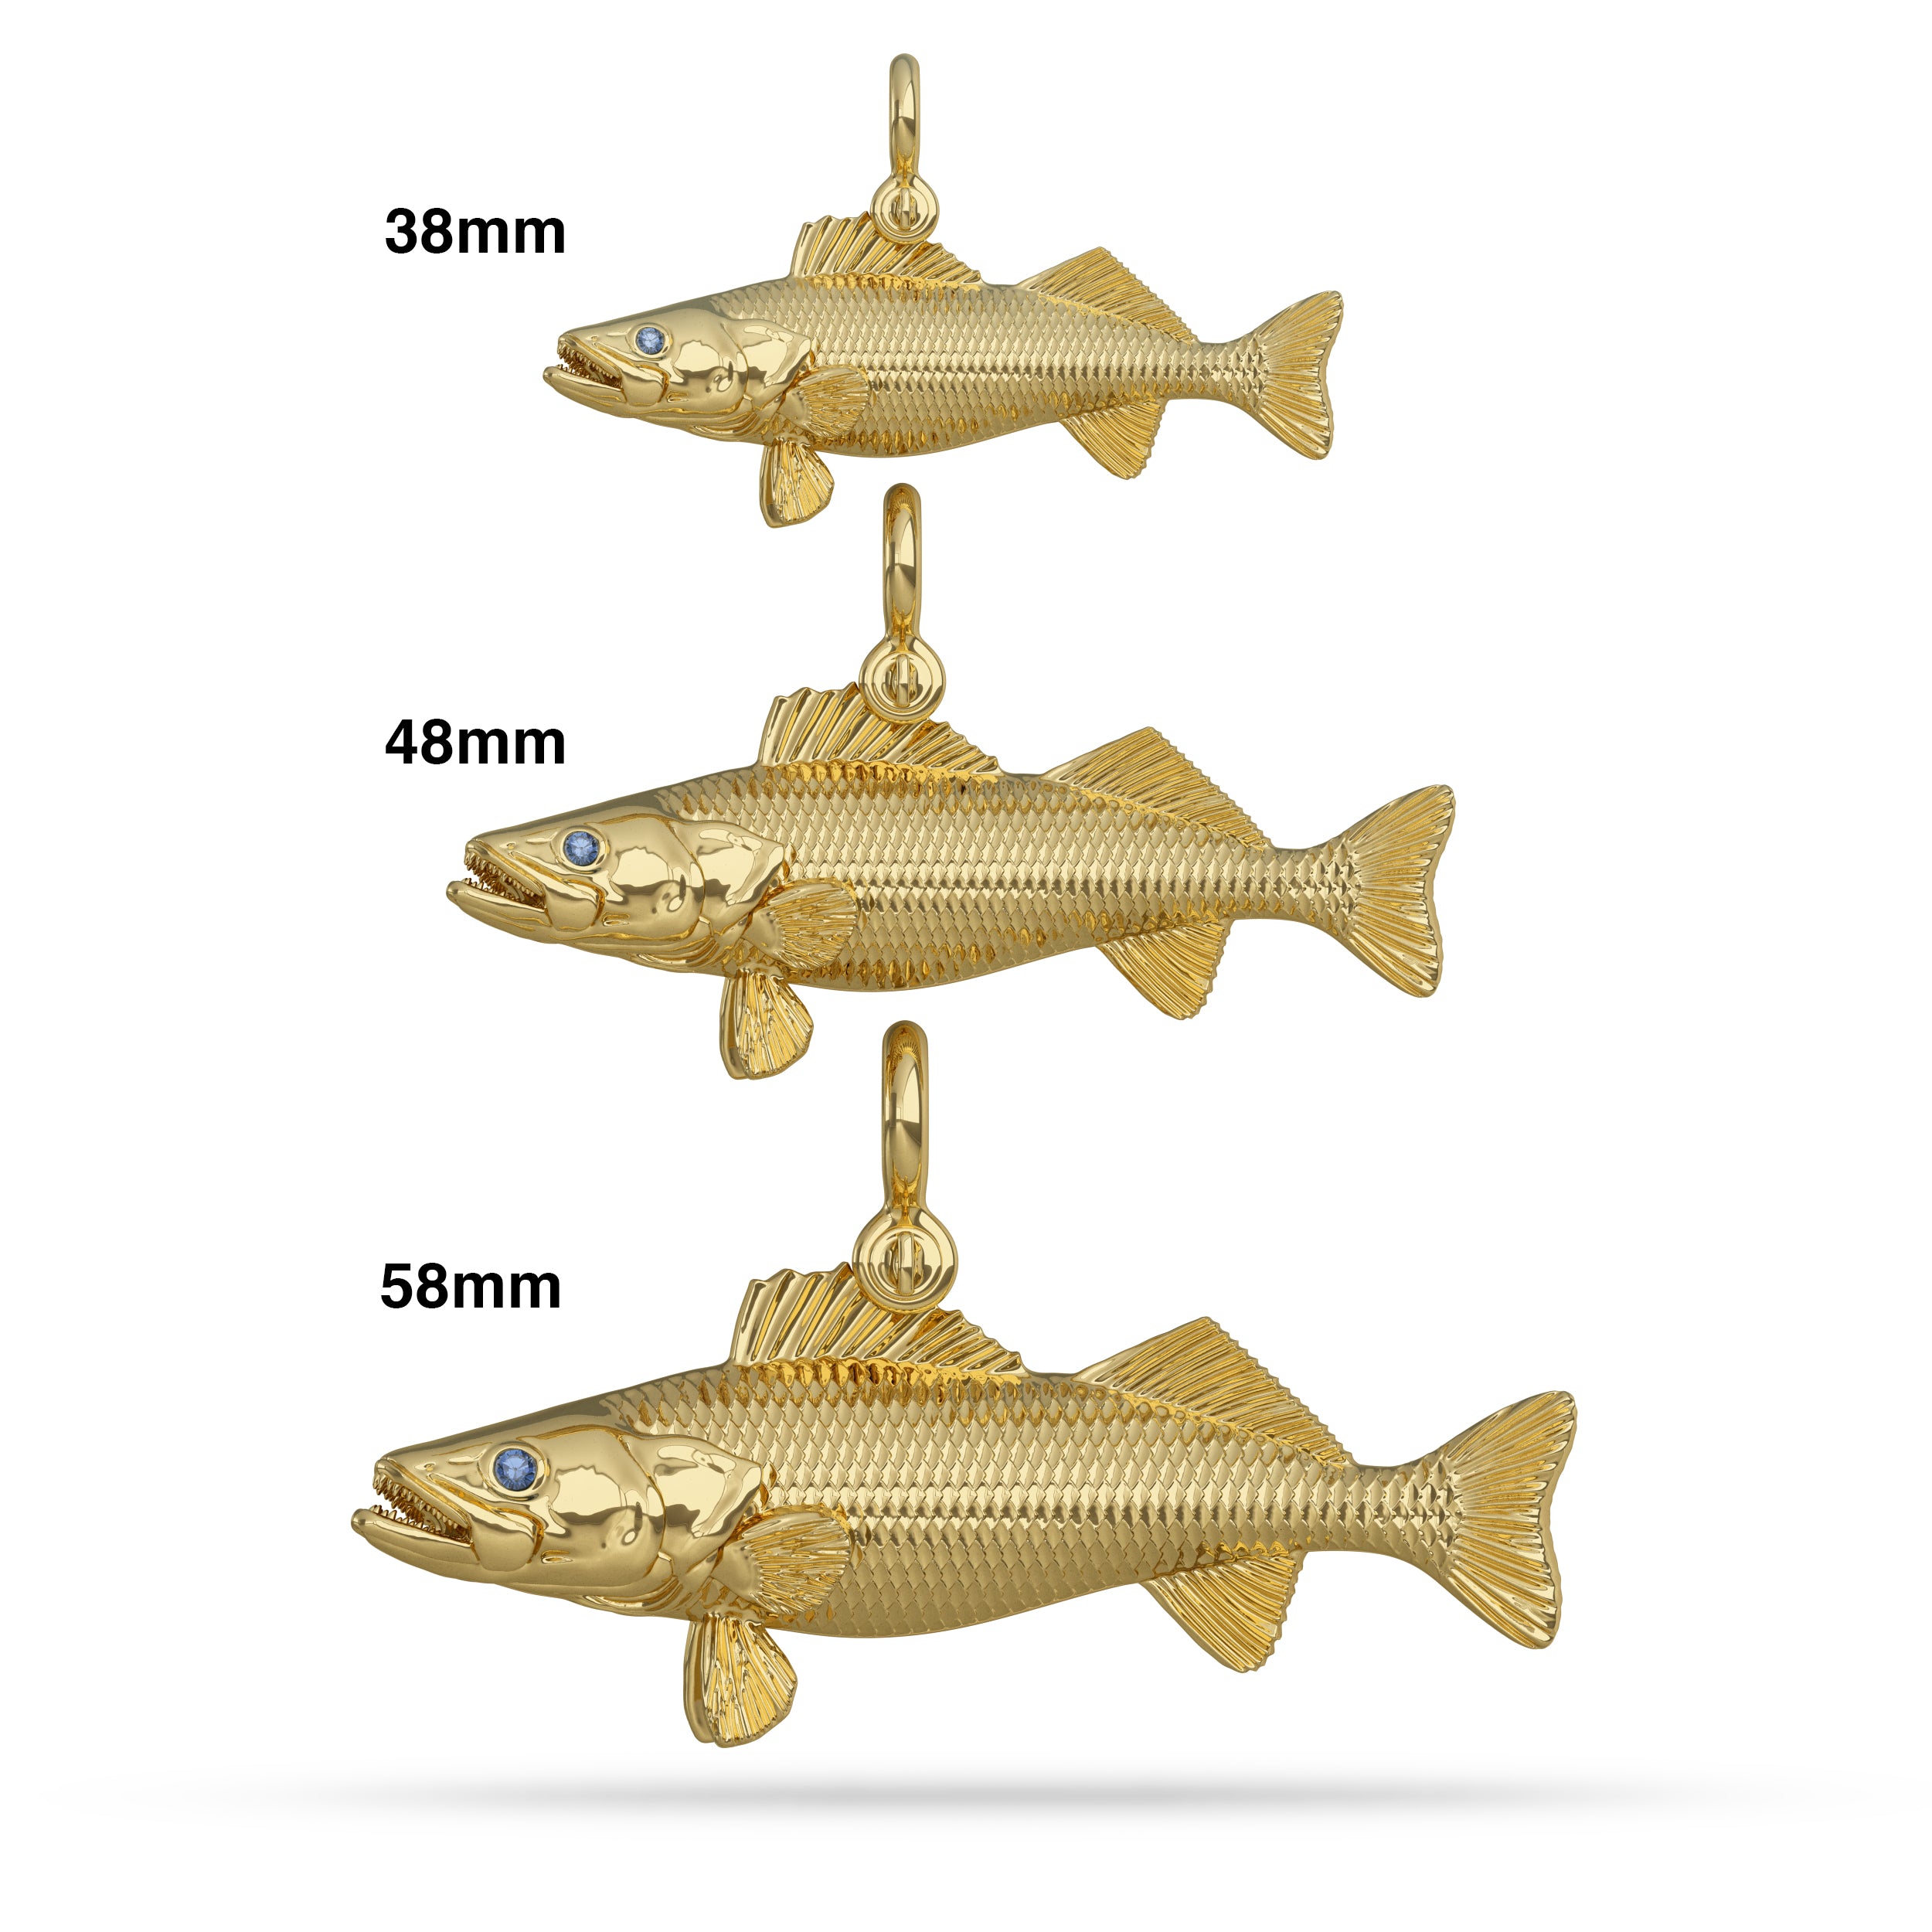 Gold Walleye Pendant Size Comparison by Nautical Treasure Jewelry 